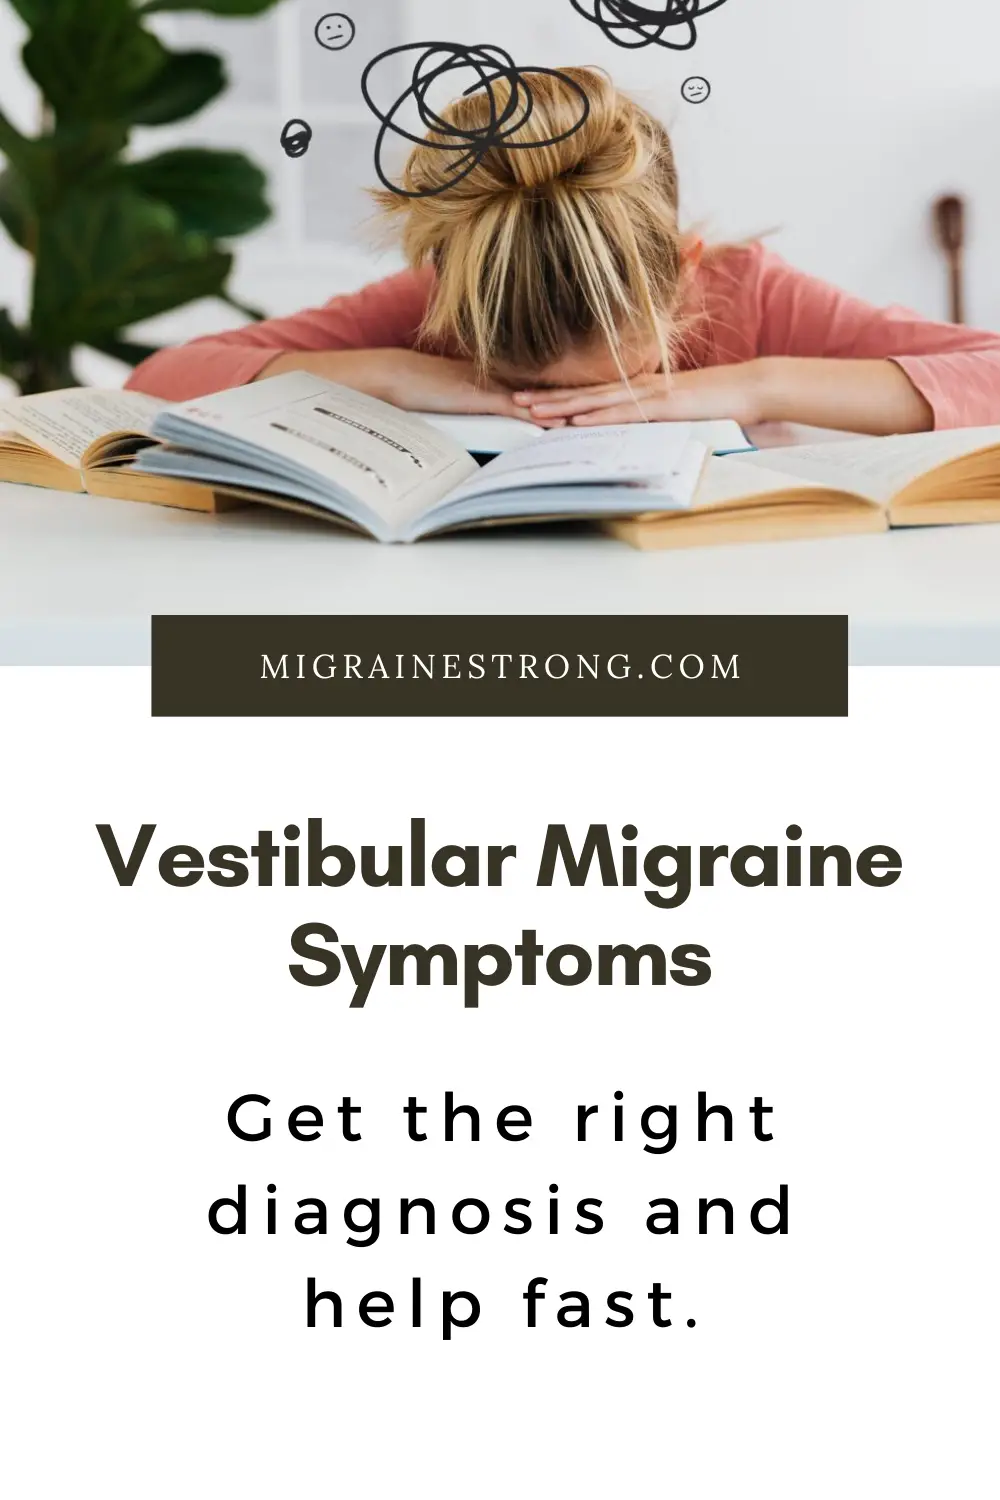 Symptoms of Vestibular Migraine That You Need to Know